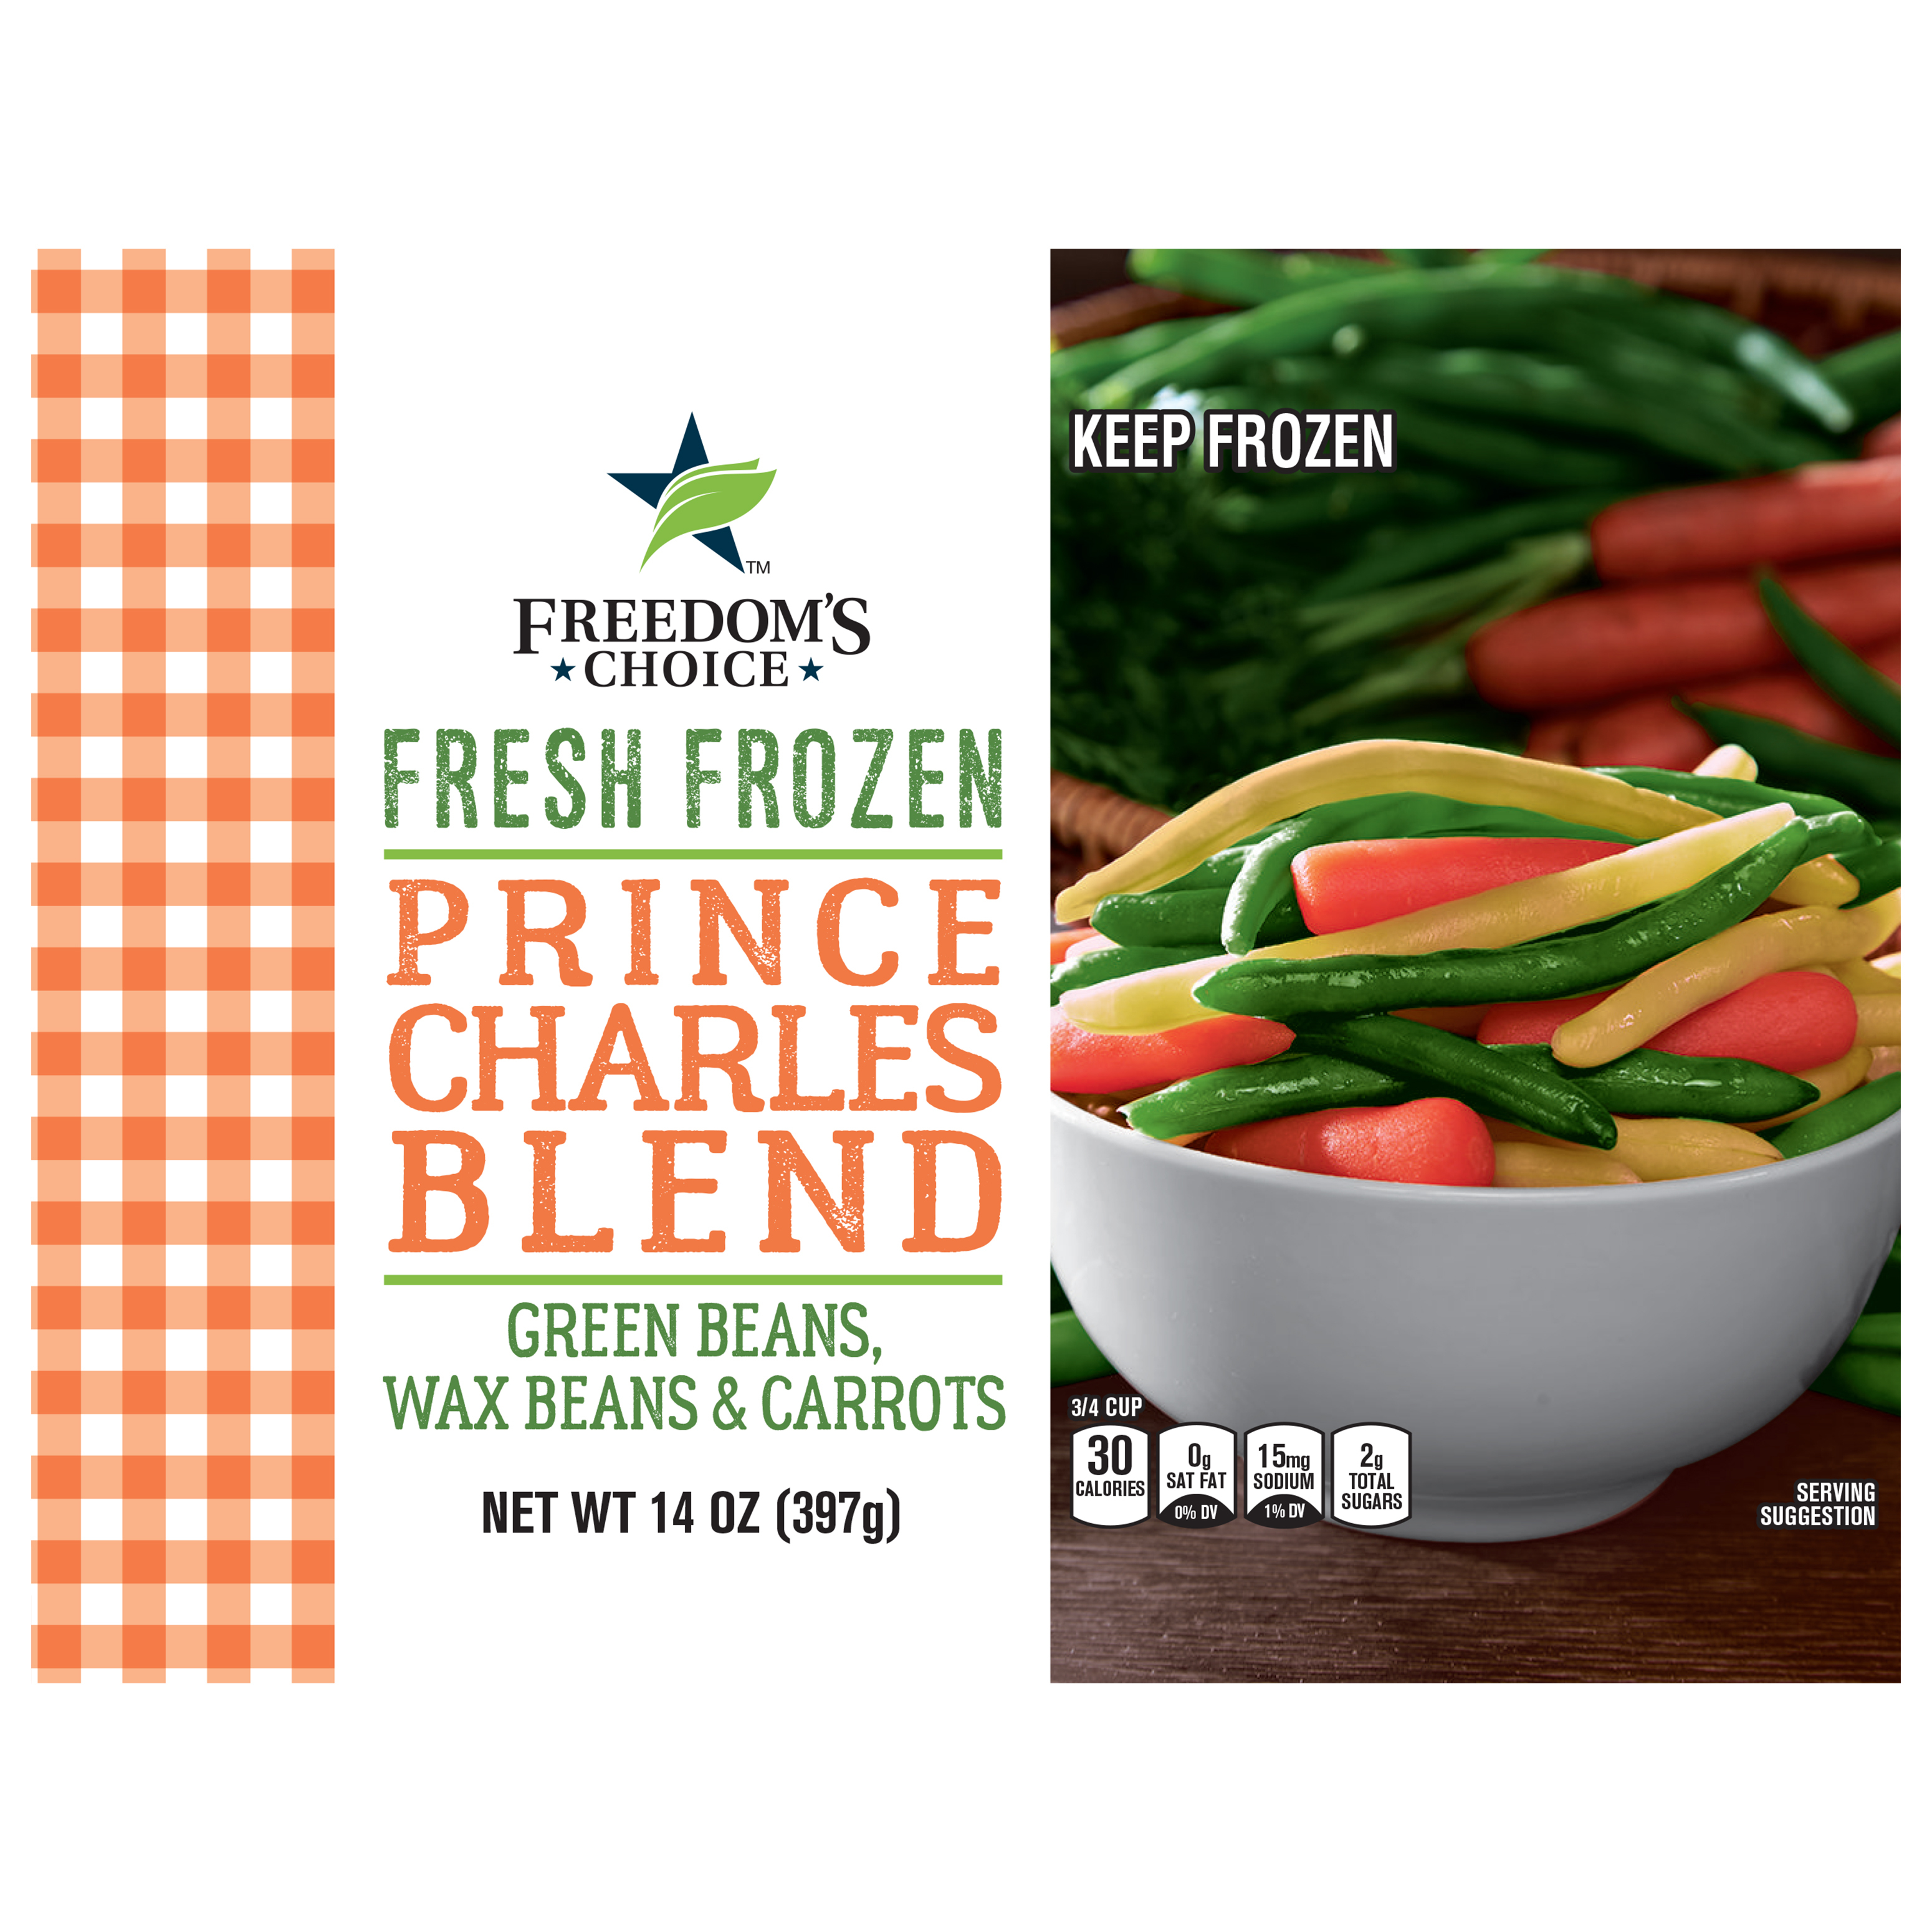 Extra Fine Green Beans or Prince Edward Medley - Season's Choice